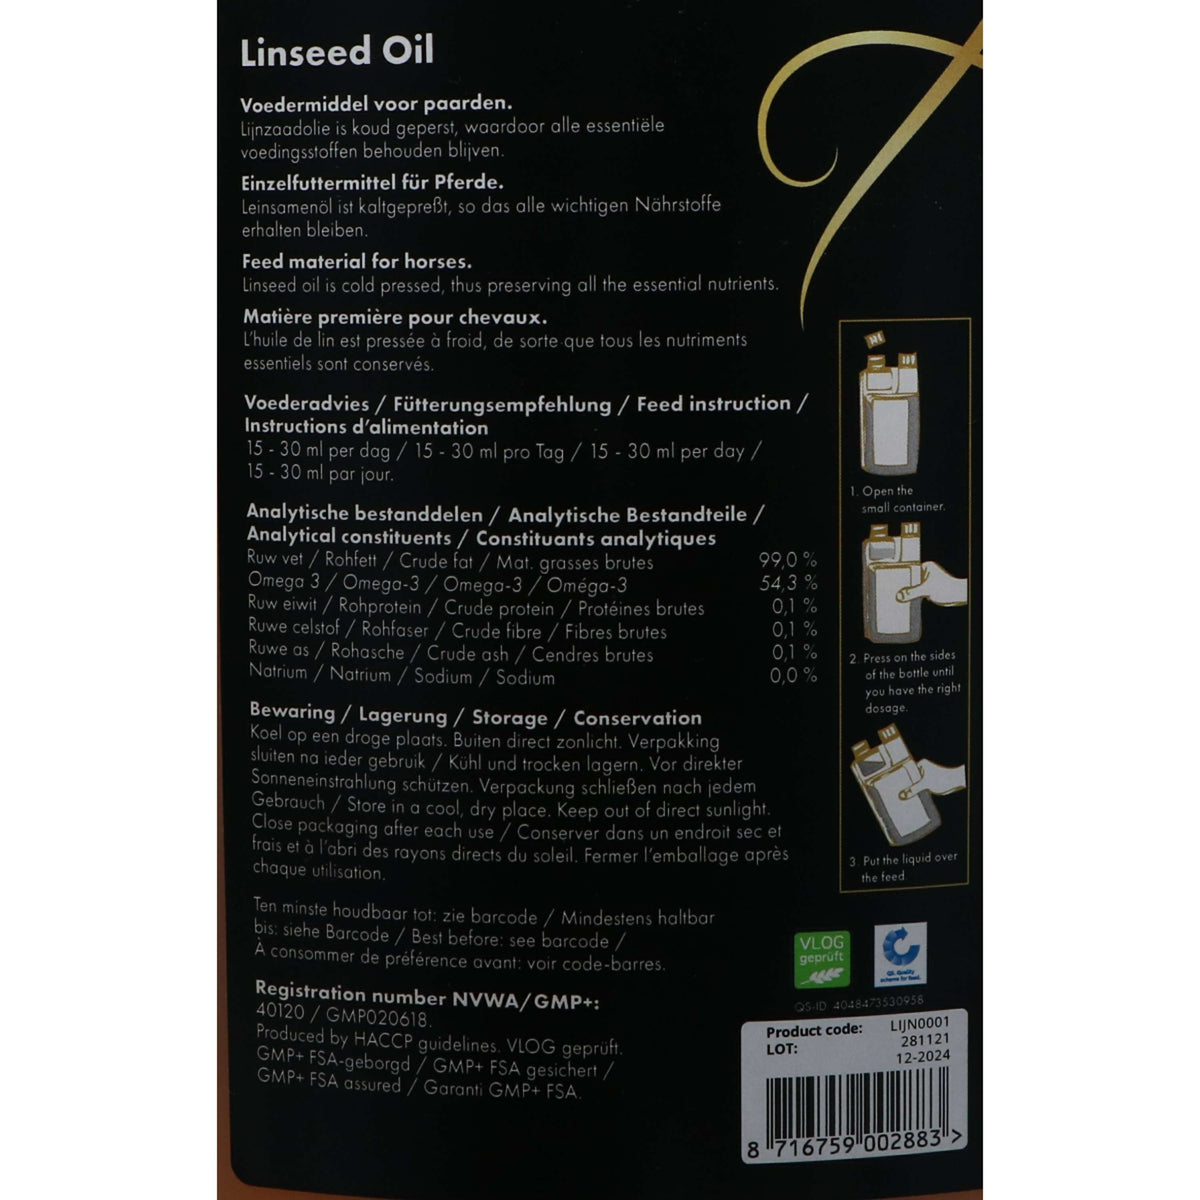 Excellent Linseed Oil Leinsamenöl